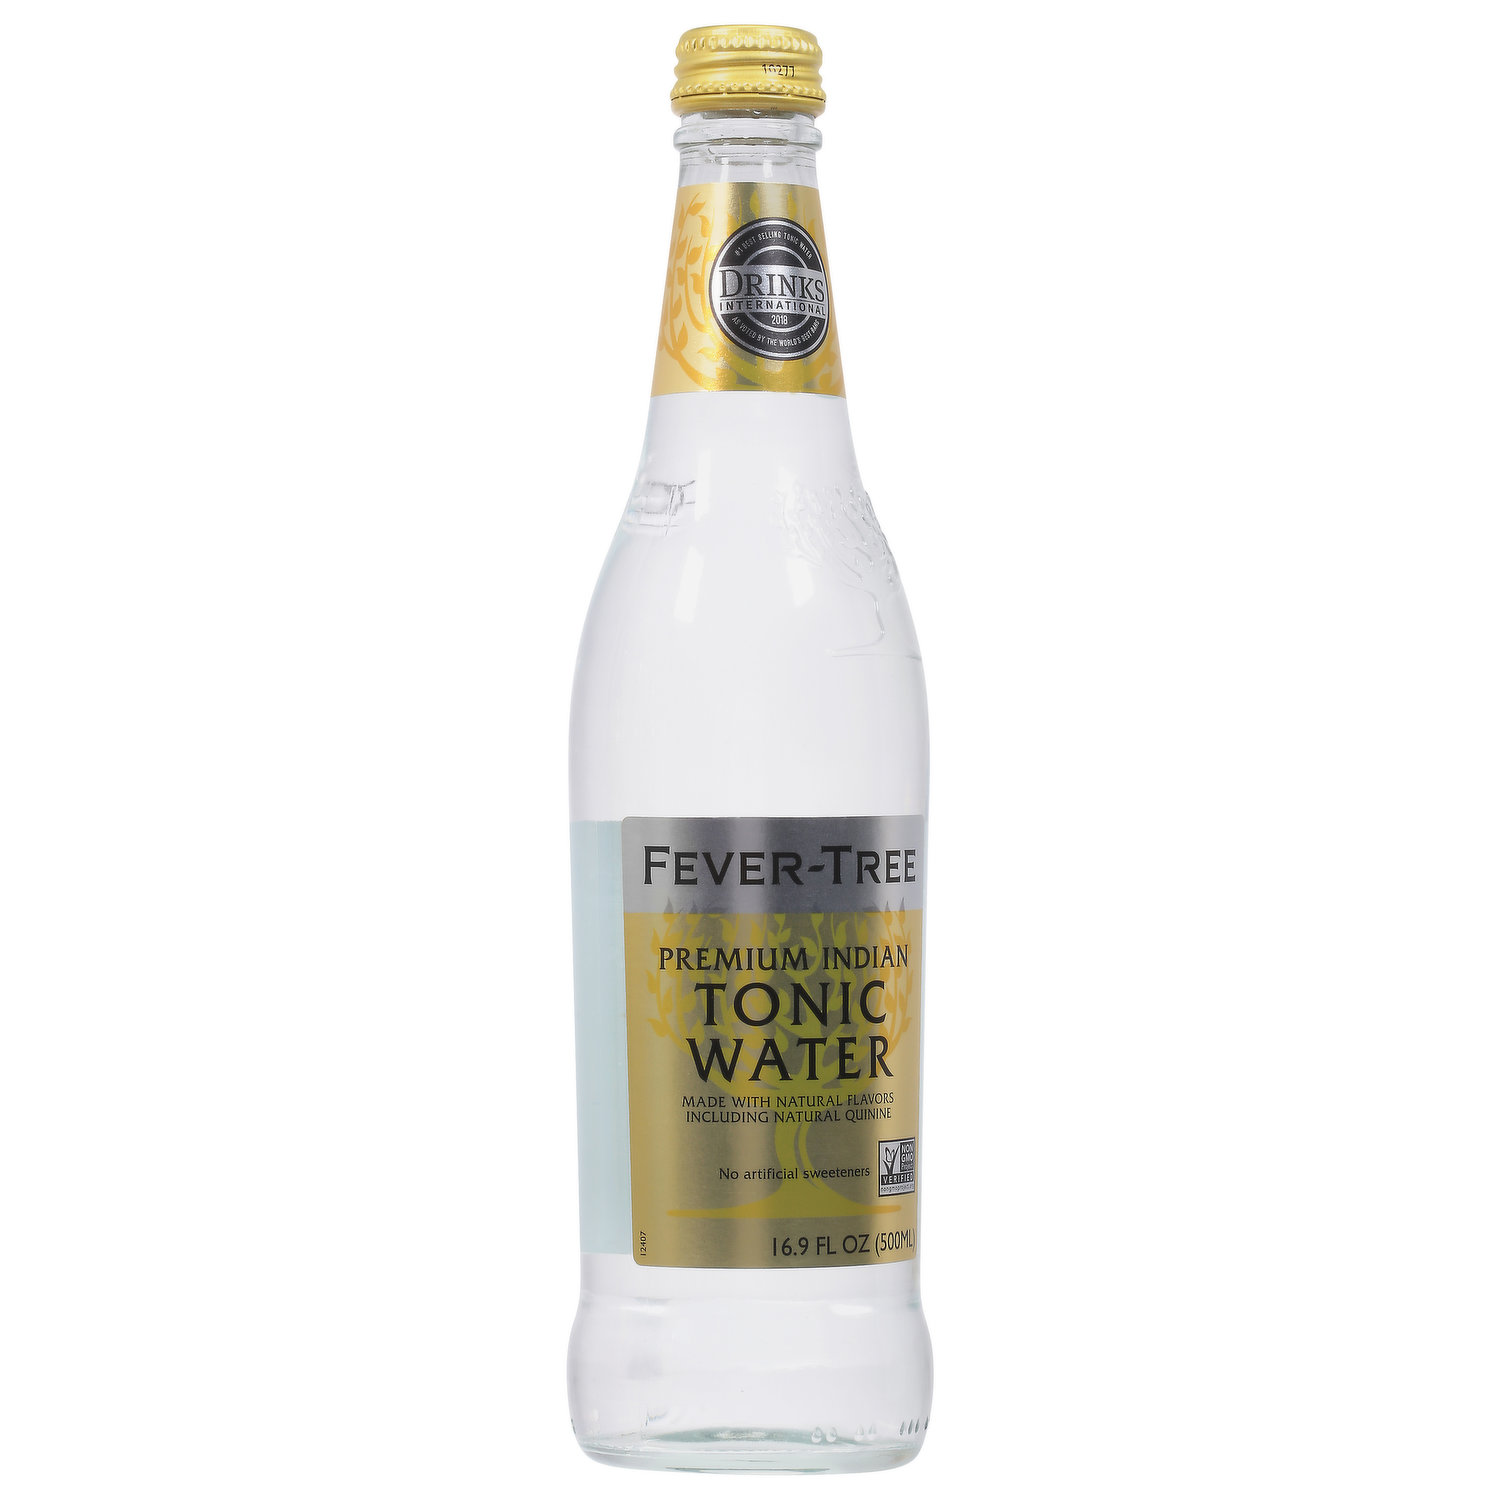 Premium Indian Tonic Water